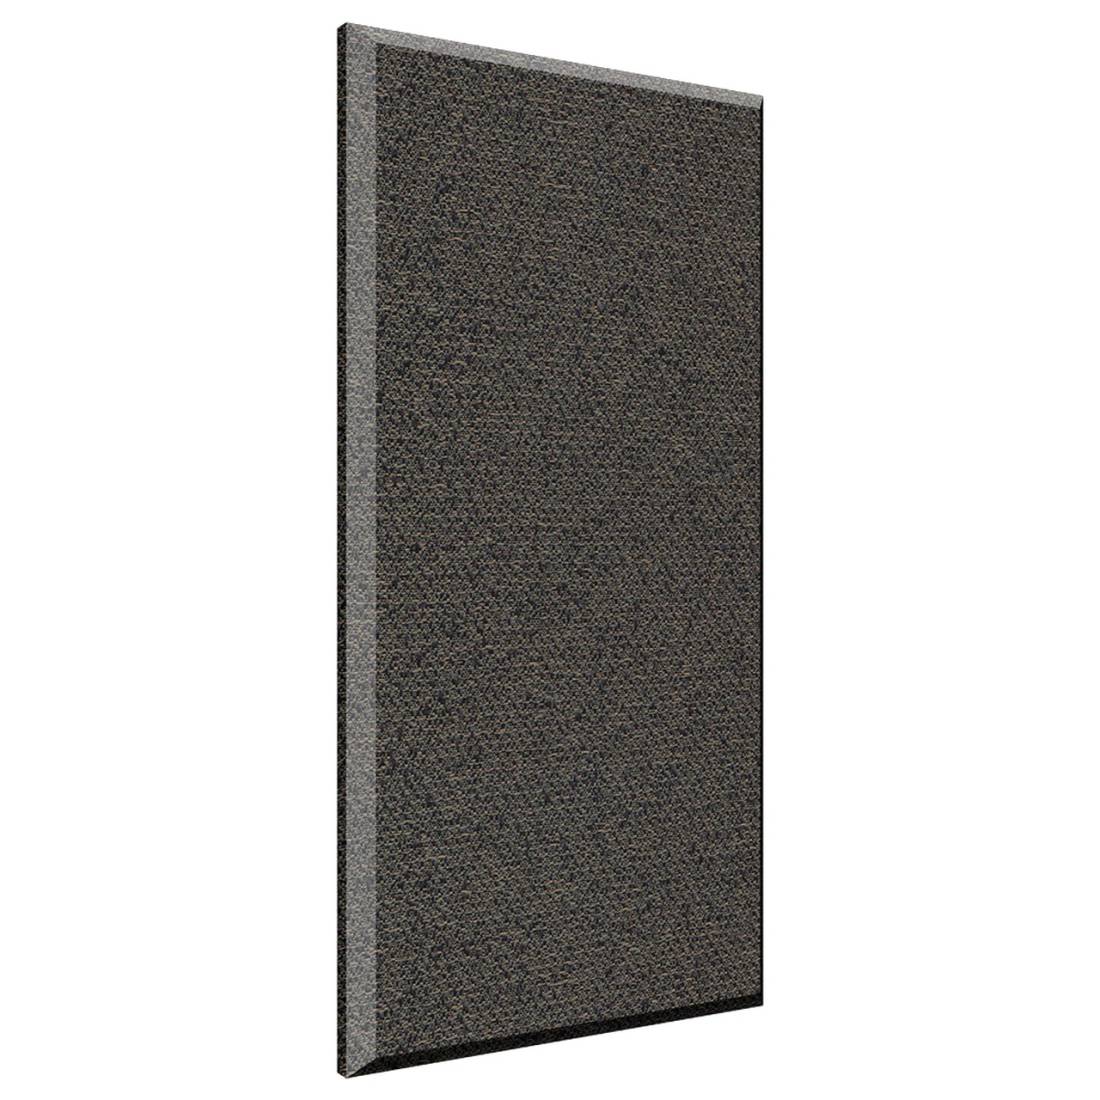 B224 ProPanel Acoustic Wall Panel (Single) 2\'x4\'x2\'\' - Obsidian